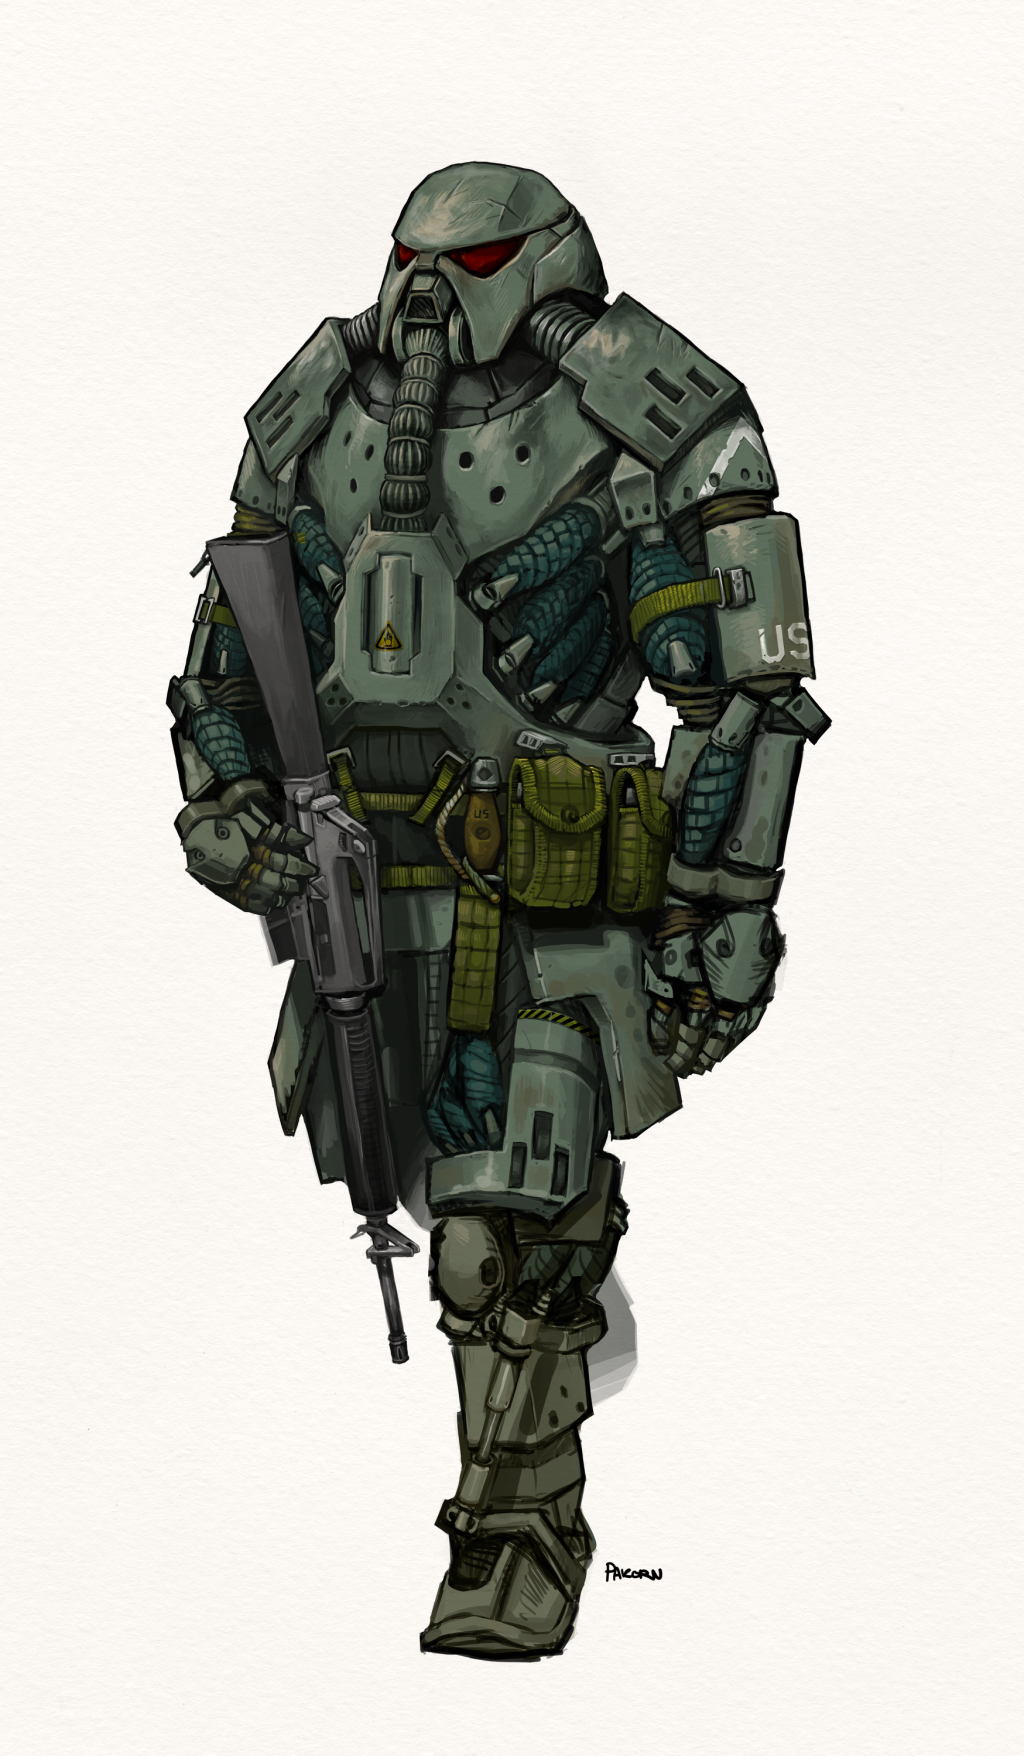 power armor concept art - Pin by raul avila on androides-robots  Power armor, Armor concept